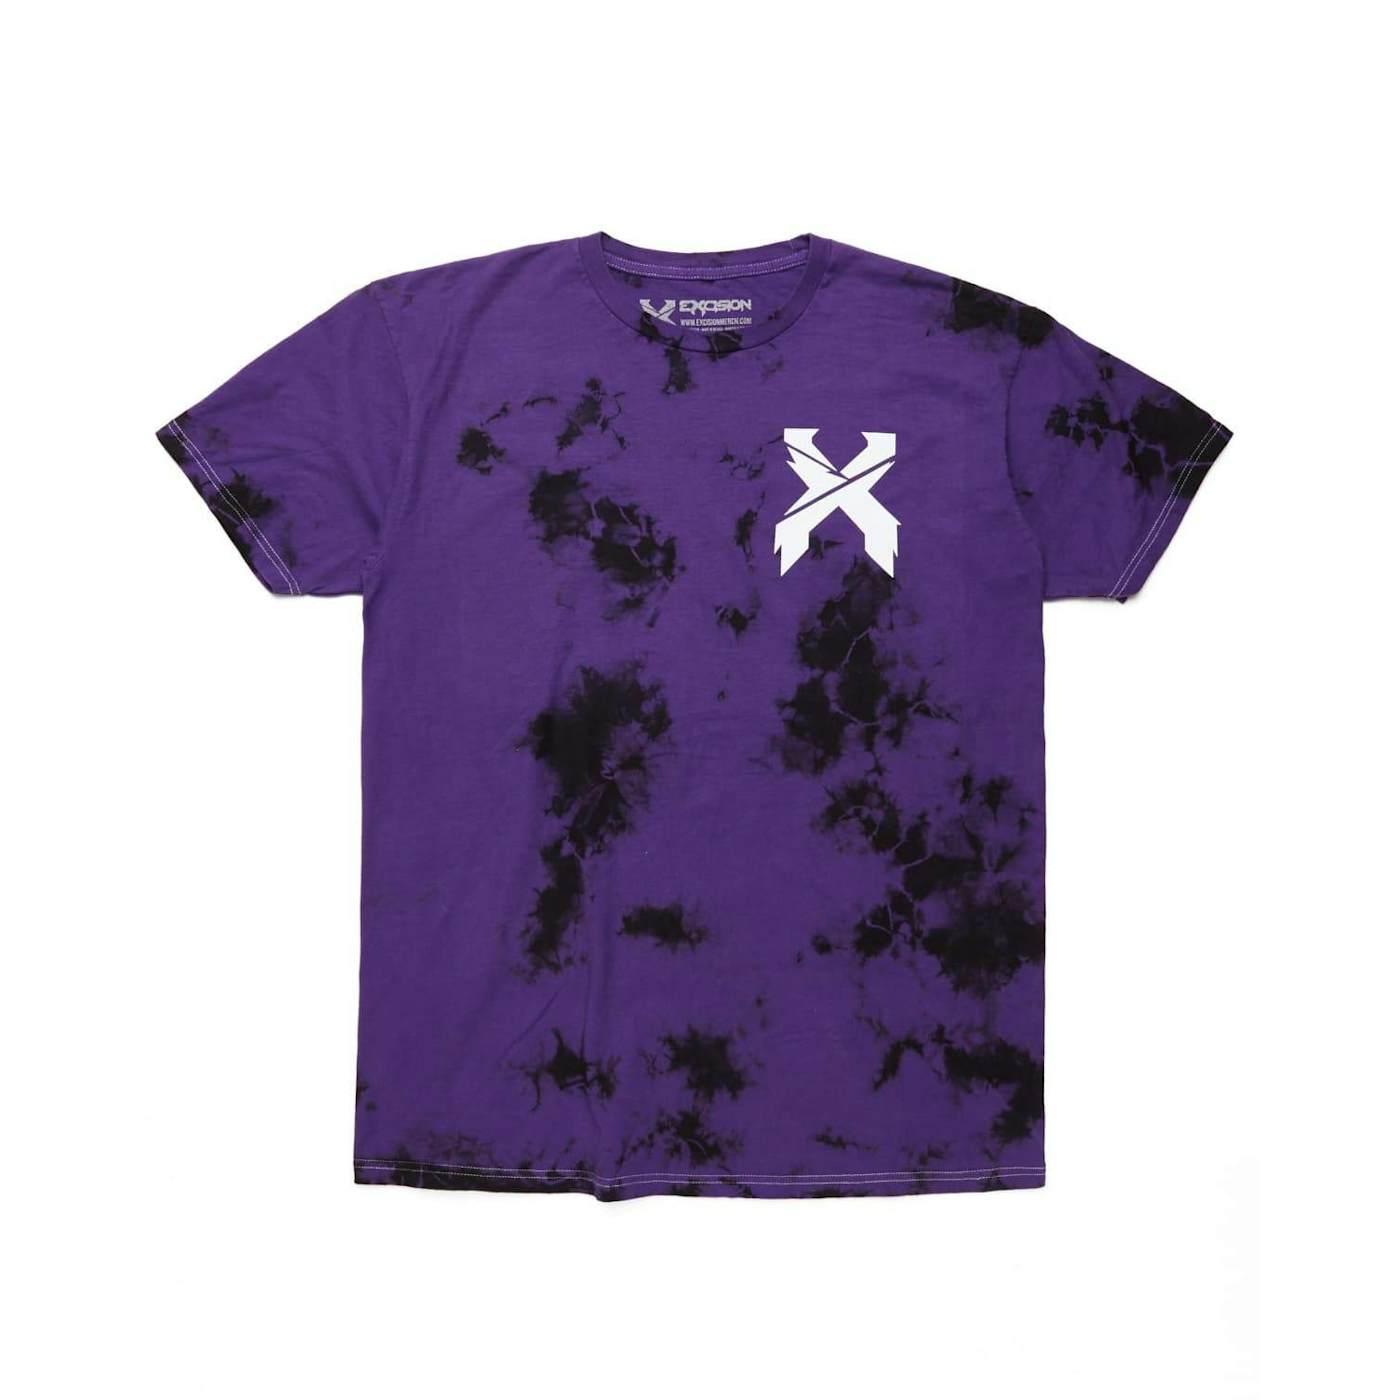 Excision Evolution Tour Tie Dye Tee - Purple/Black